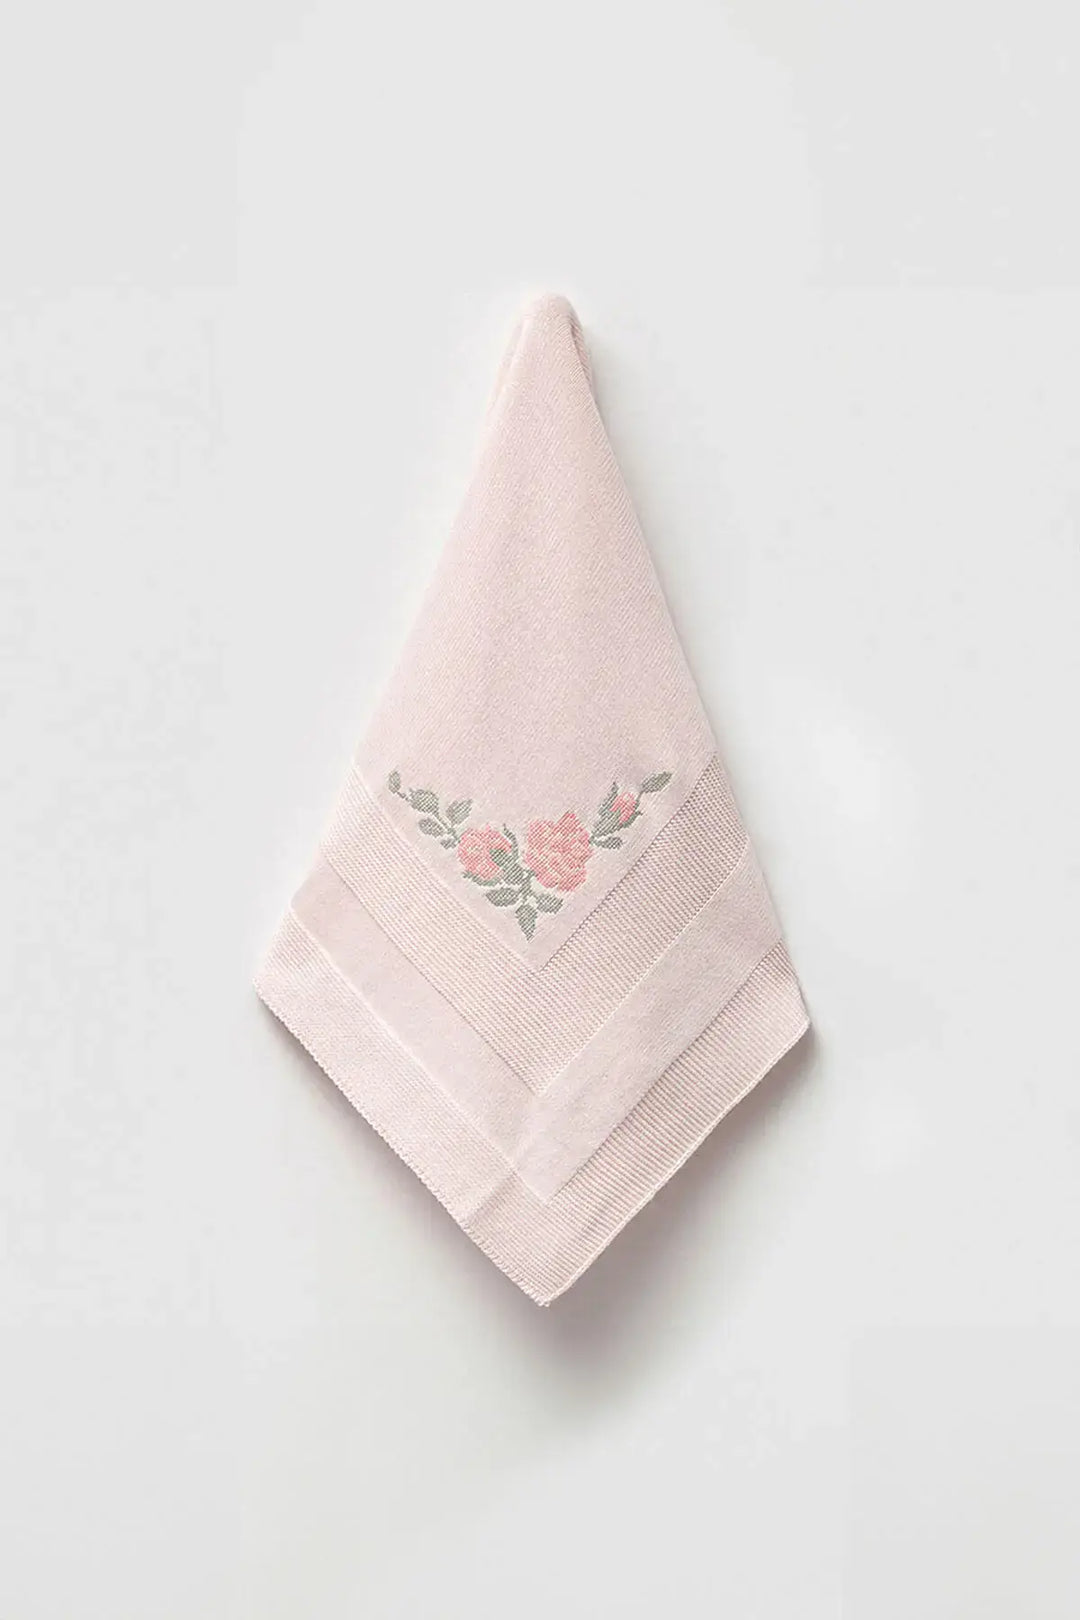 Alicia Pink Newborn Knitwear Coming Home Set (5 pcs)